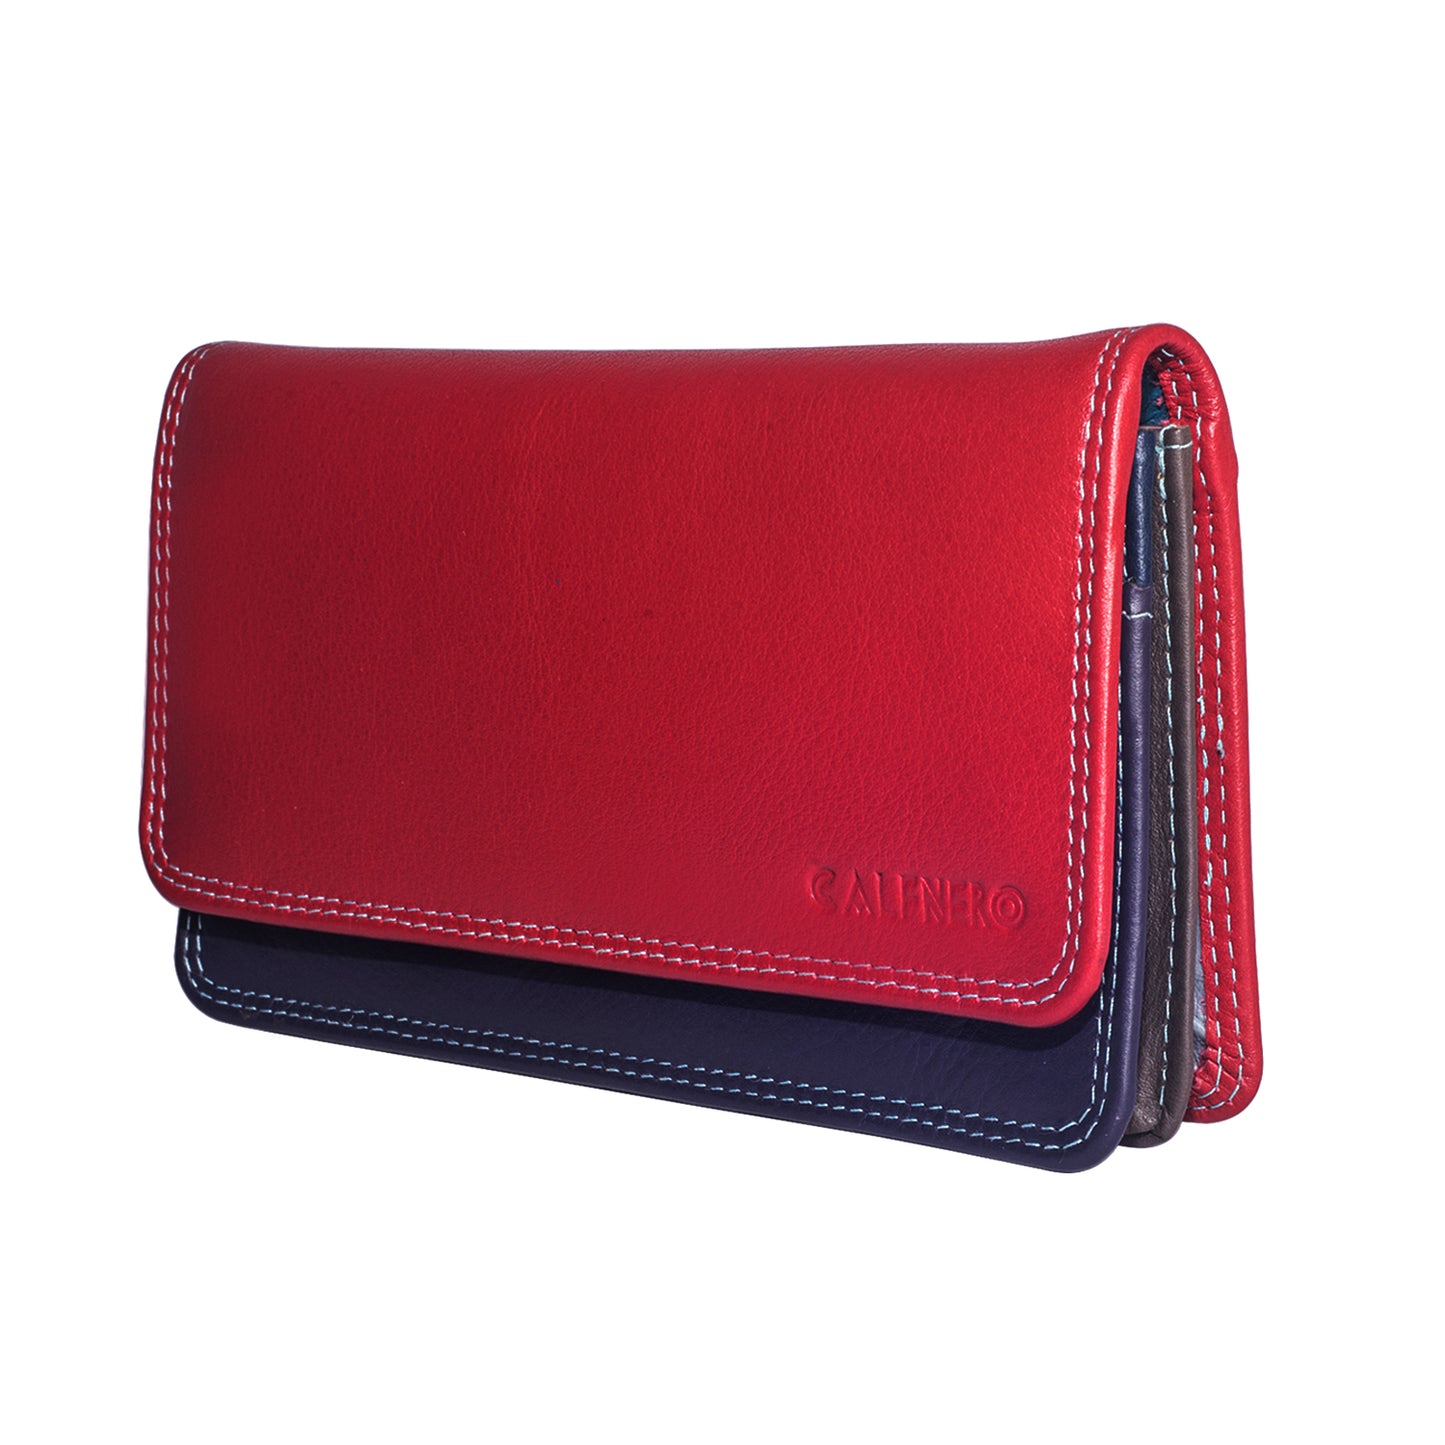 Calfnero Genuine Leather Women's wallet (109-Red-Multi)